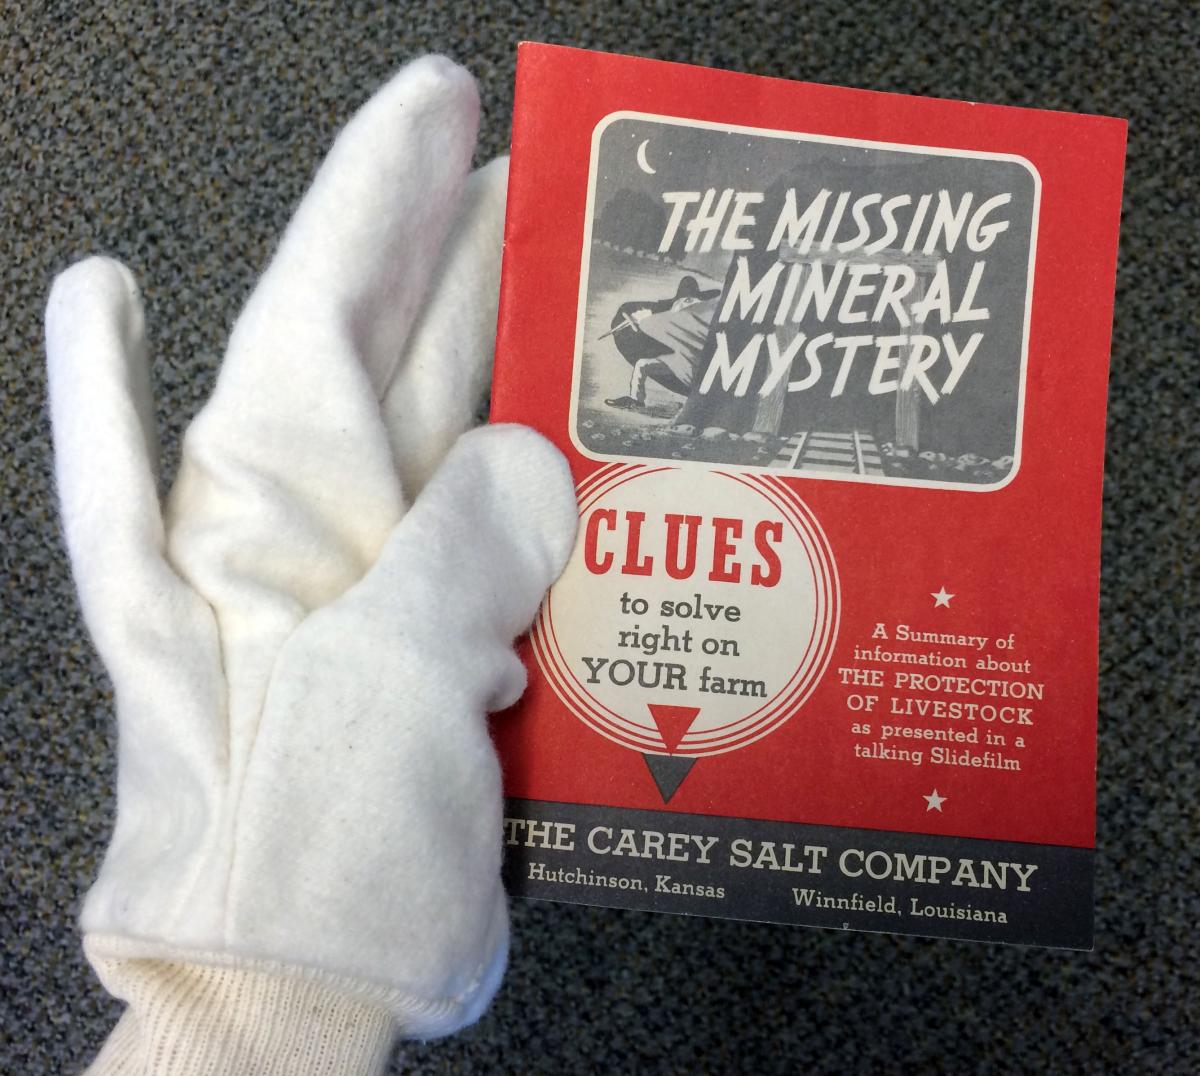 Fun mystery book based on salt